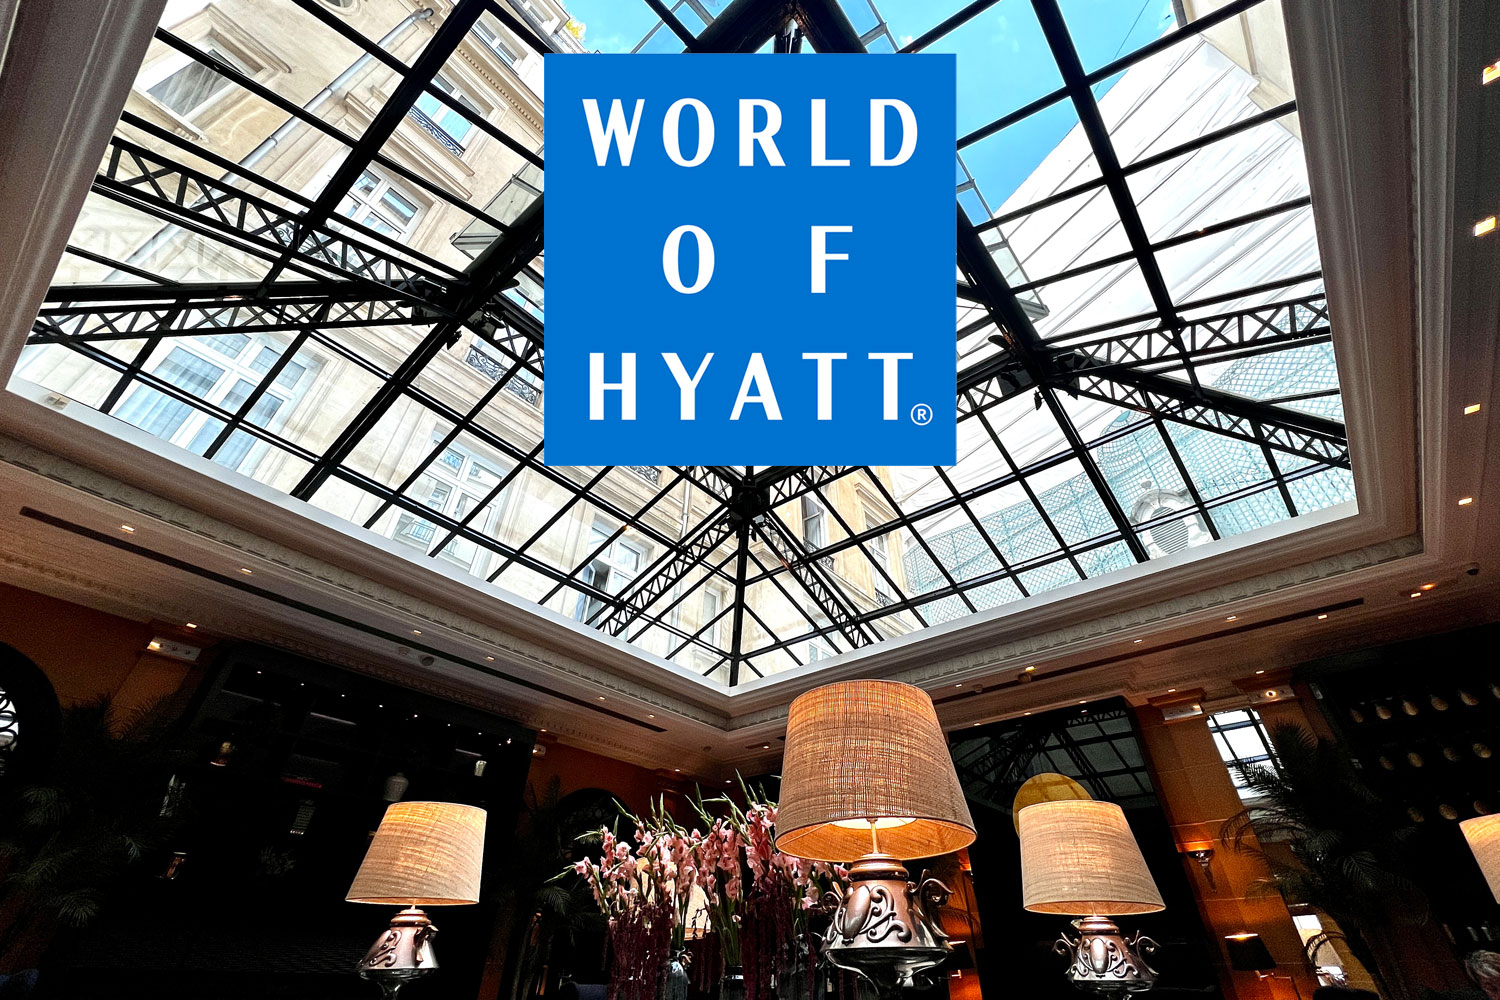 World Of Hyatt reward program